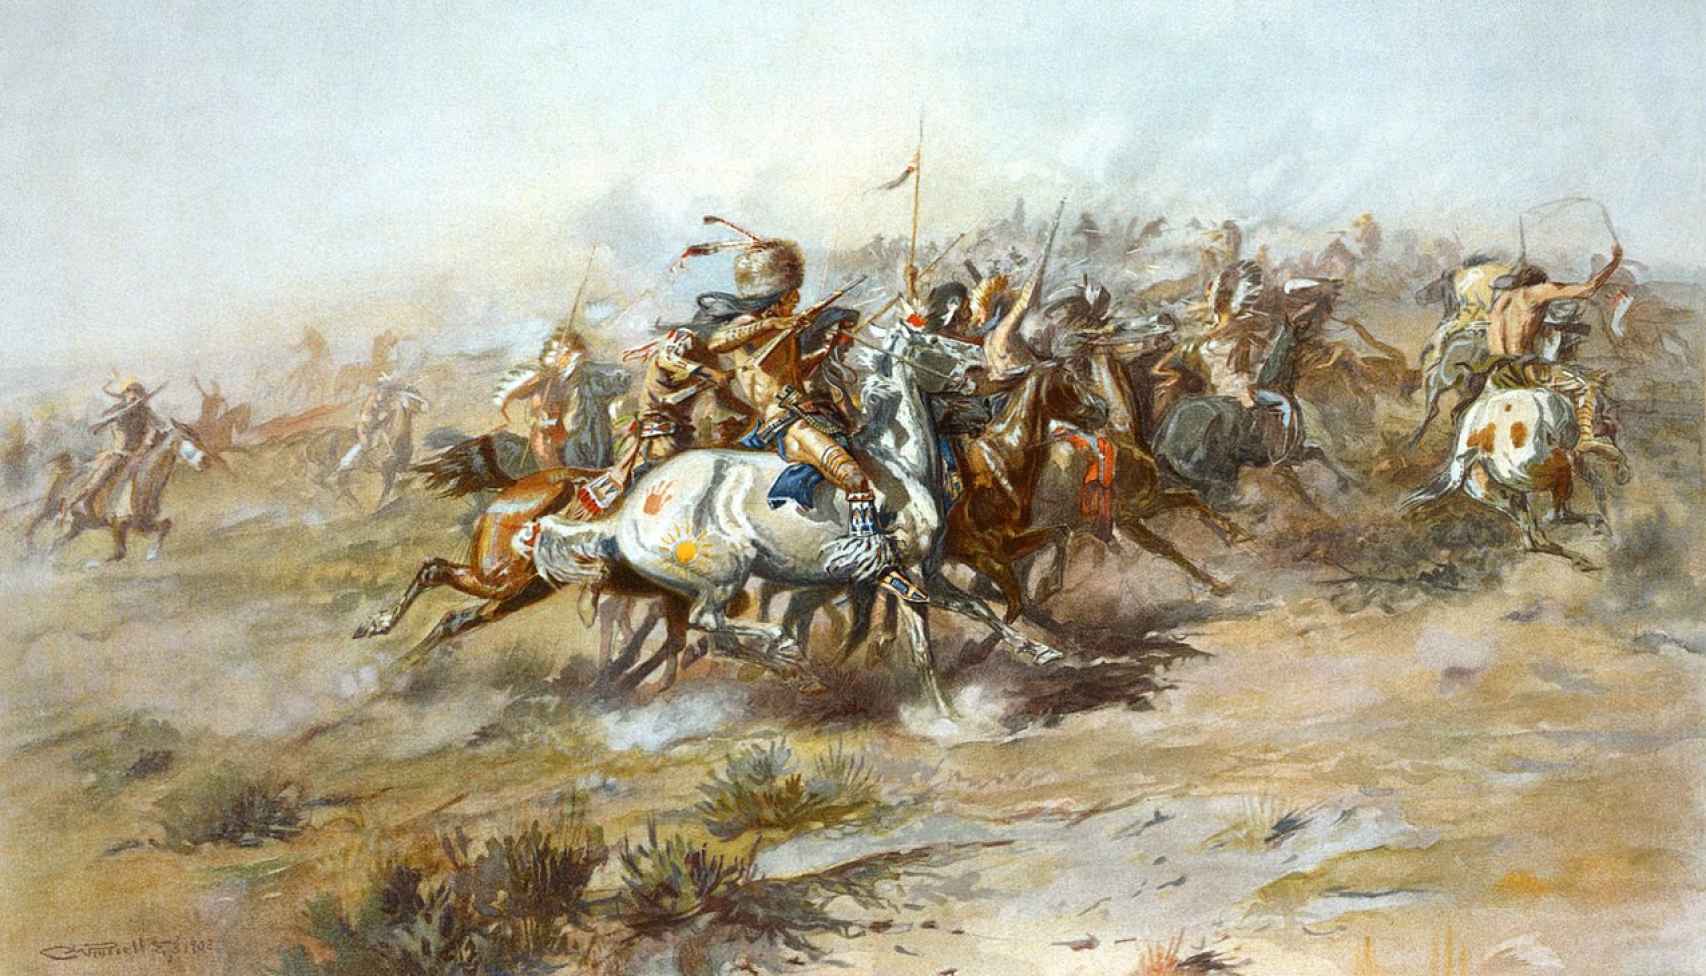 'La lucha de Custer', cuadro de Charles Marion Russell (1903).